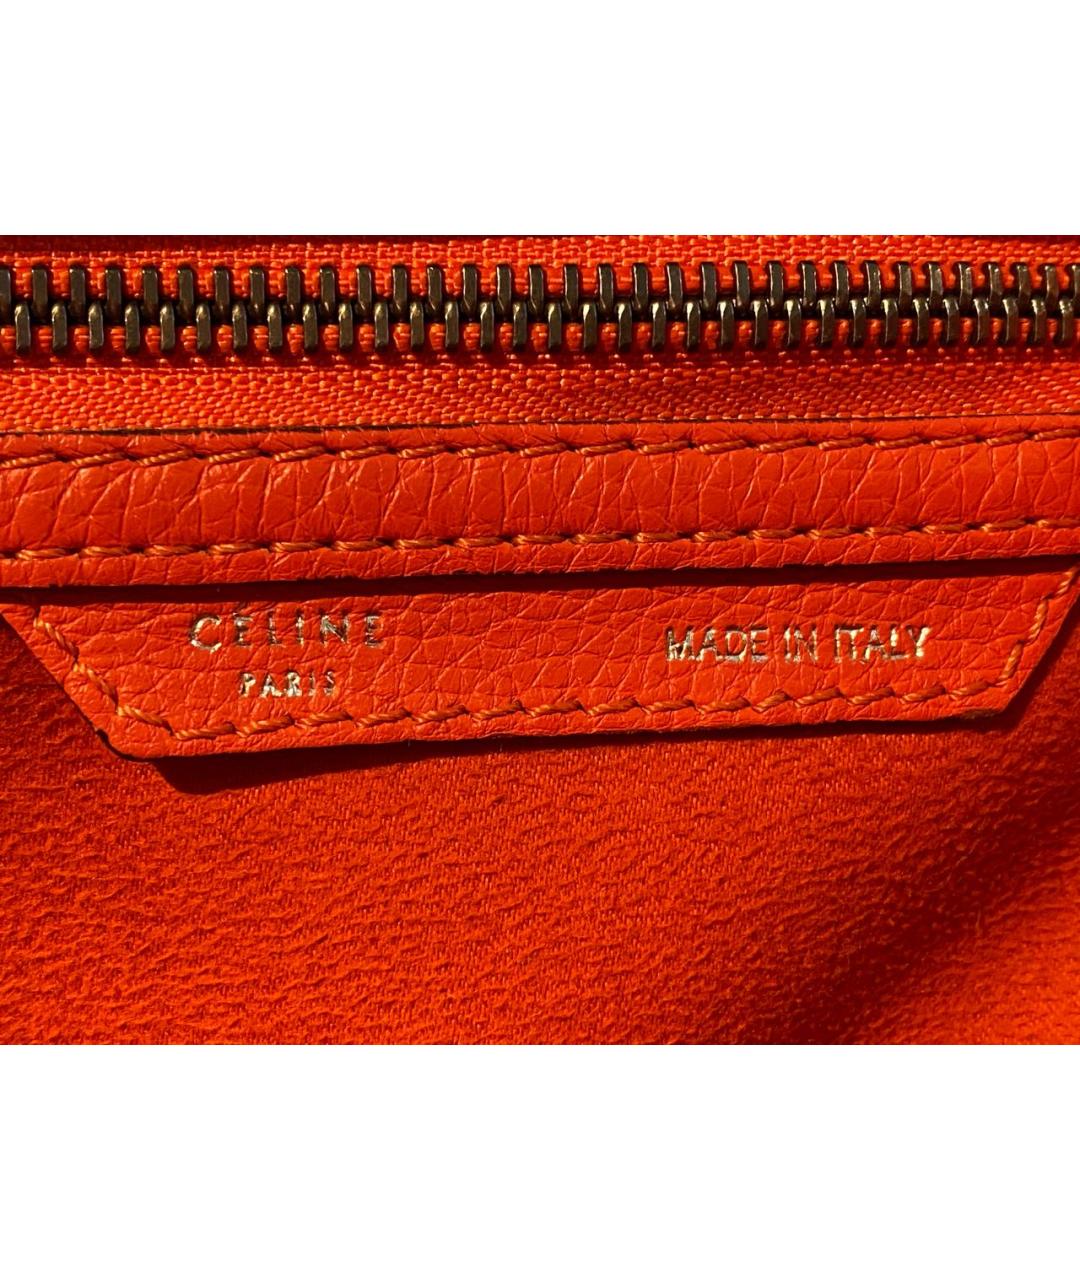 CELINE PRE-OWNED Оранжевая кожаная сумка тоут, фото 3